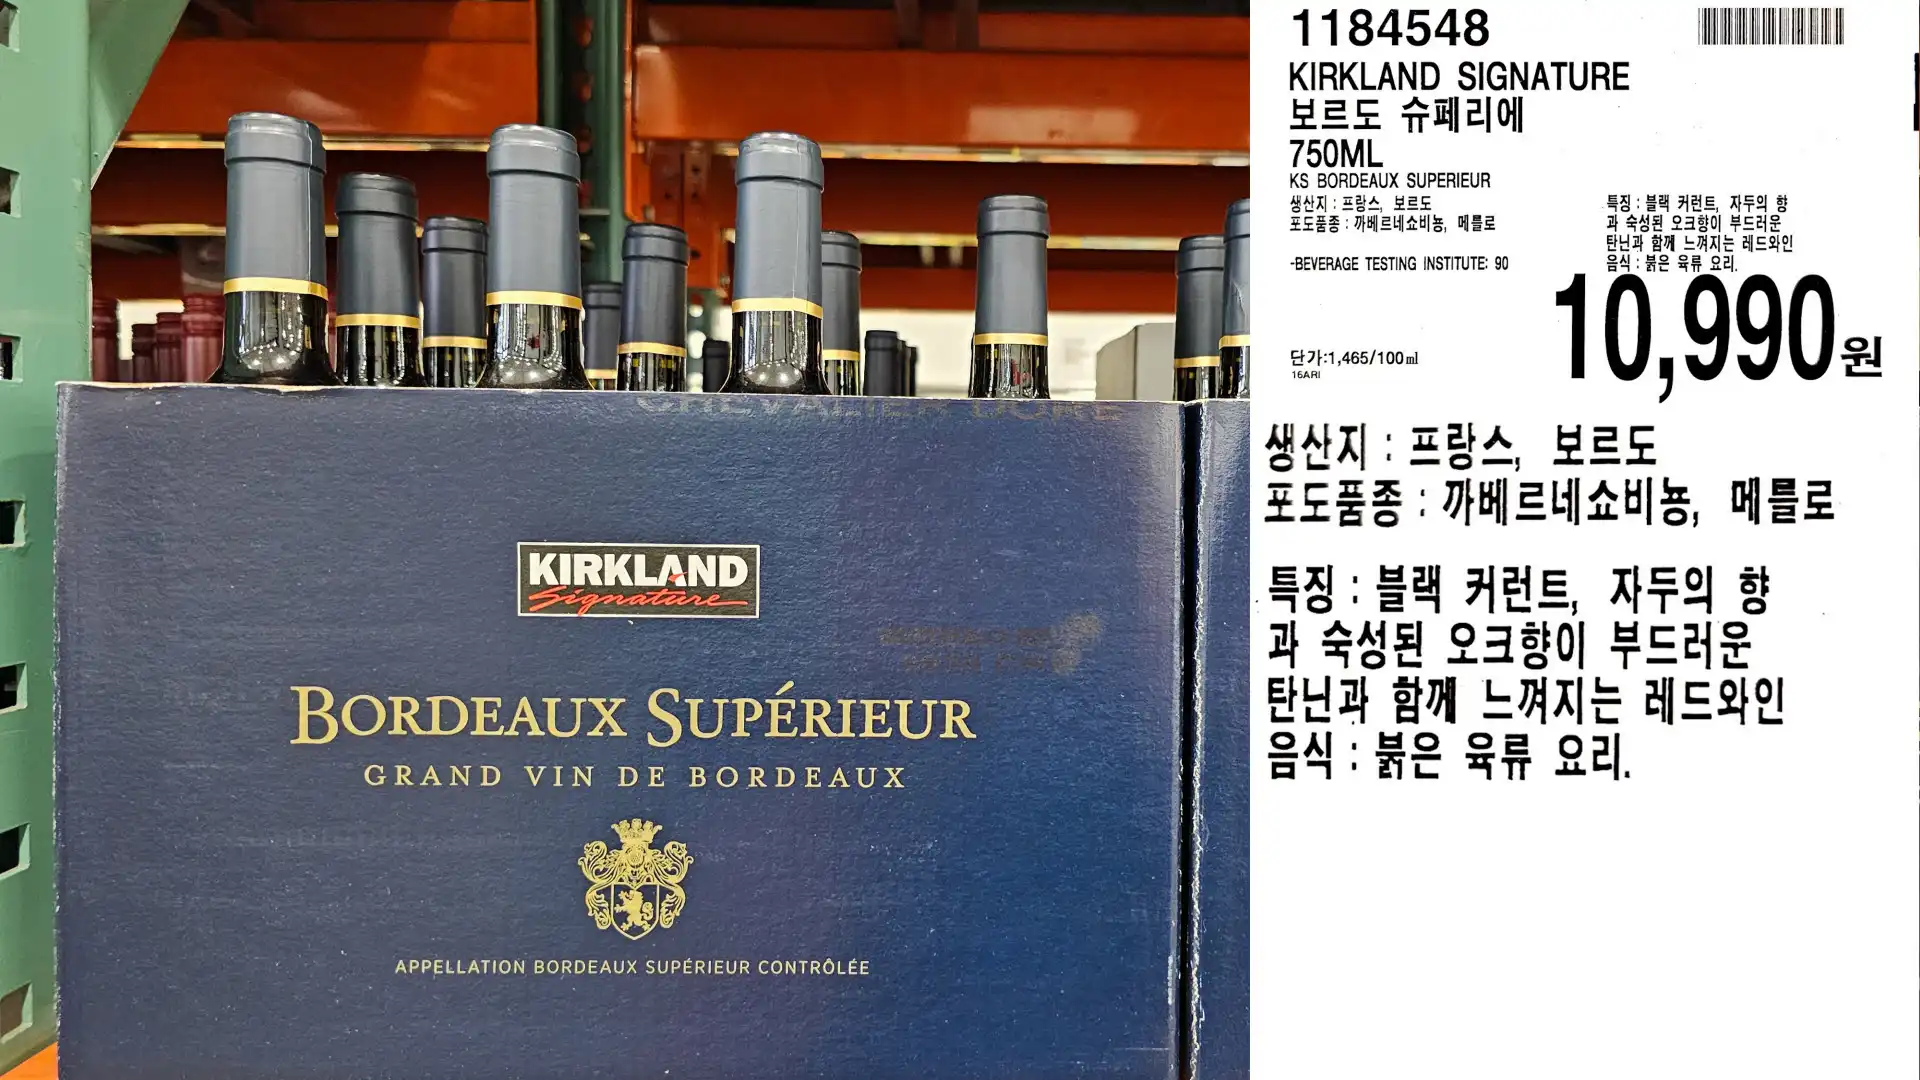 KIRKLAND SIGNATURE
보르도 슈페리에
750ML
KS BORDEAUX SUPERIEUR
생산지 : 프랑스, 보르도
포도품종: 까베르네쇼비뇽, 메를로
-BEVERAGE TESTING INSTITUTE: 90
단가:1,465/100ml
10,990원